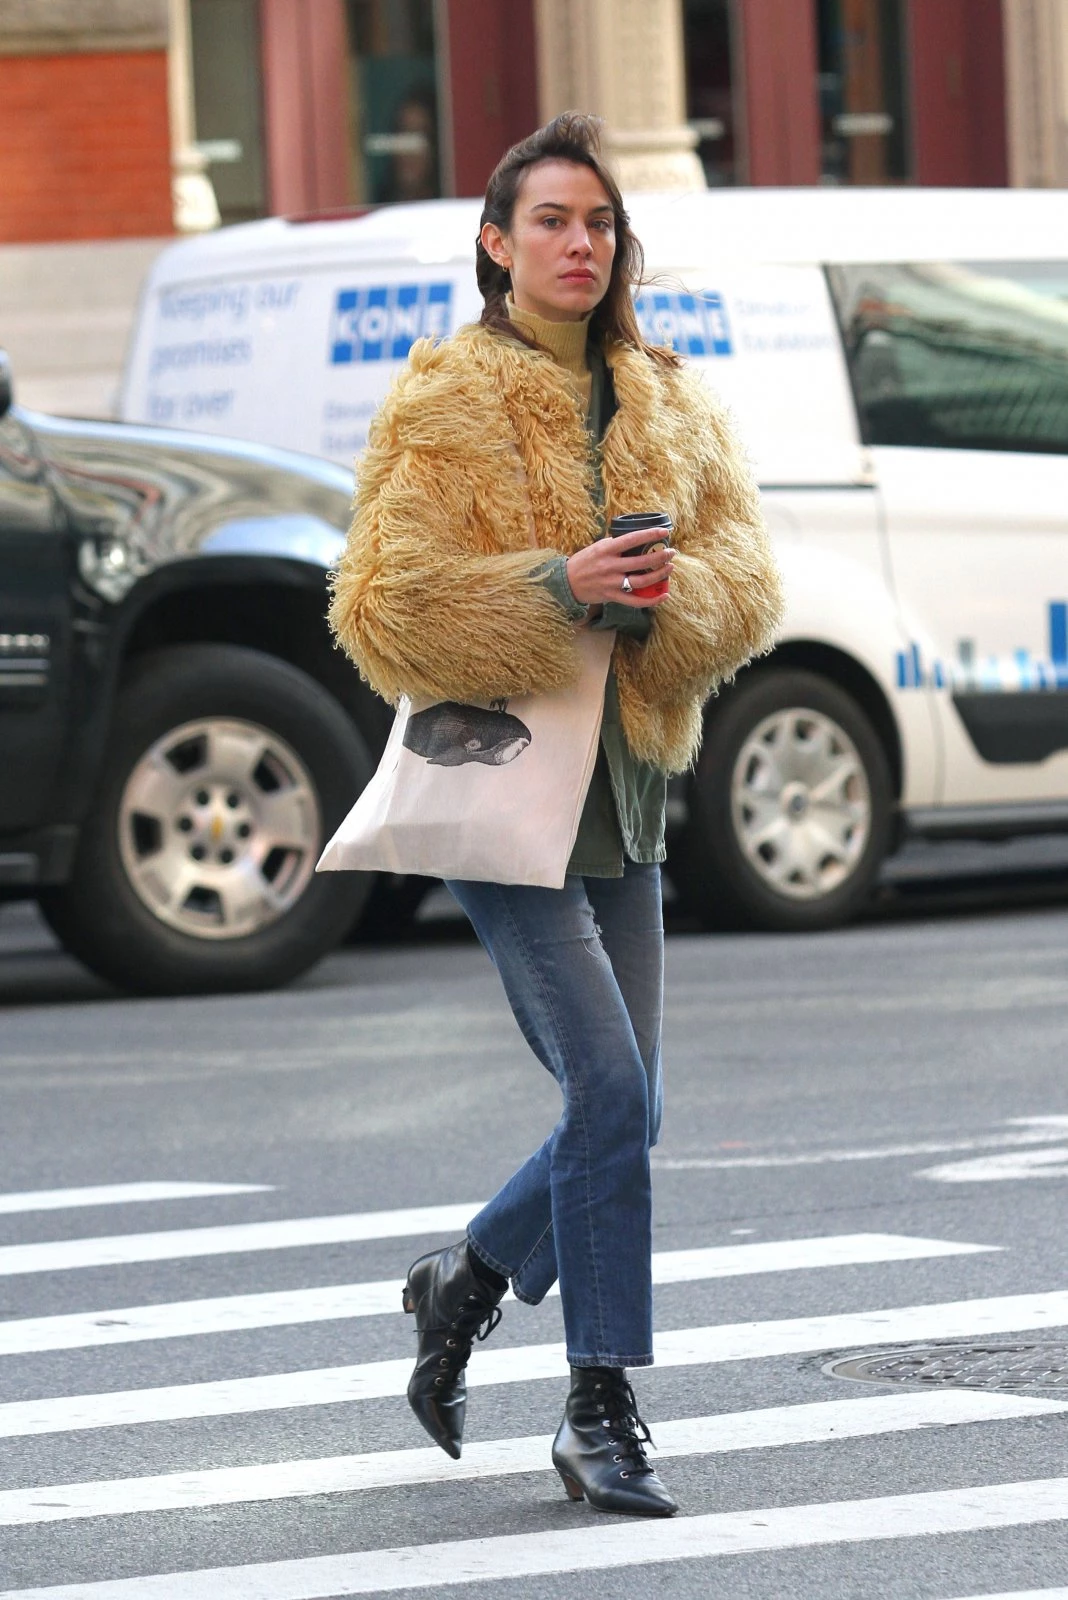 Alexa Chung | Πώς ντύνεται όταν έχει κρύο; Ένα super stylish outfit